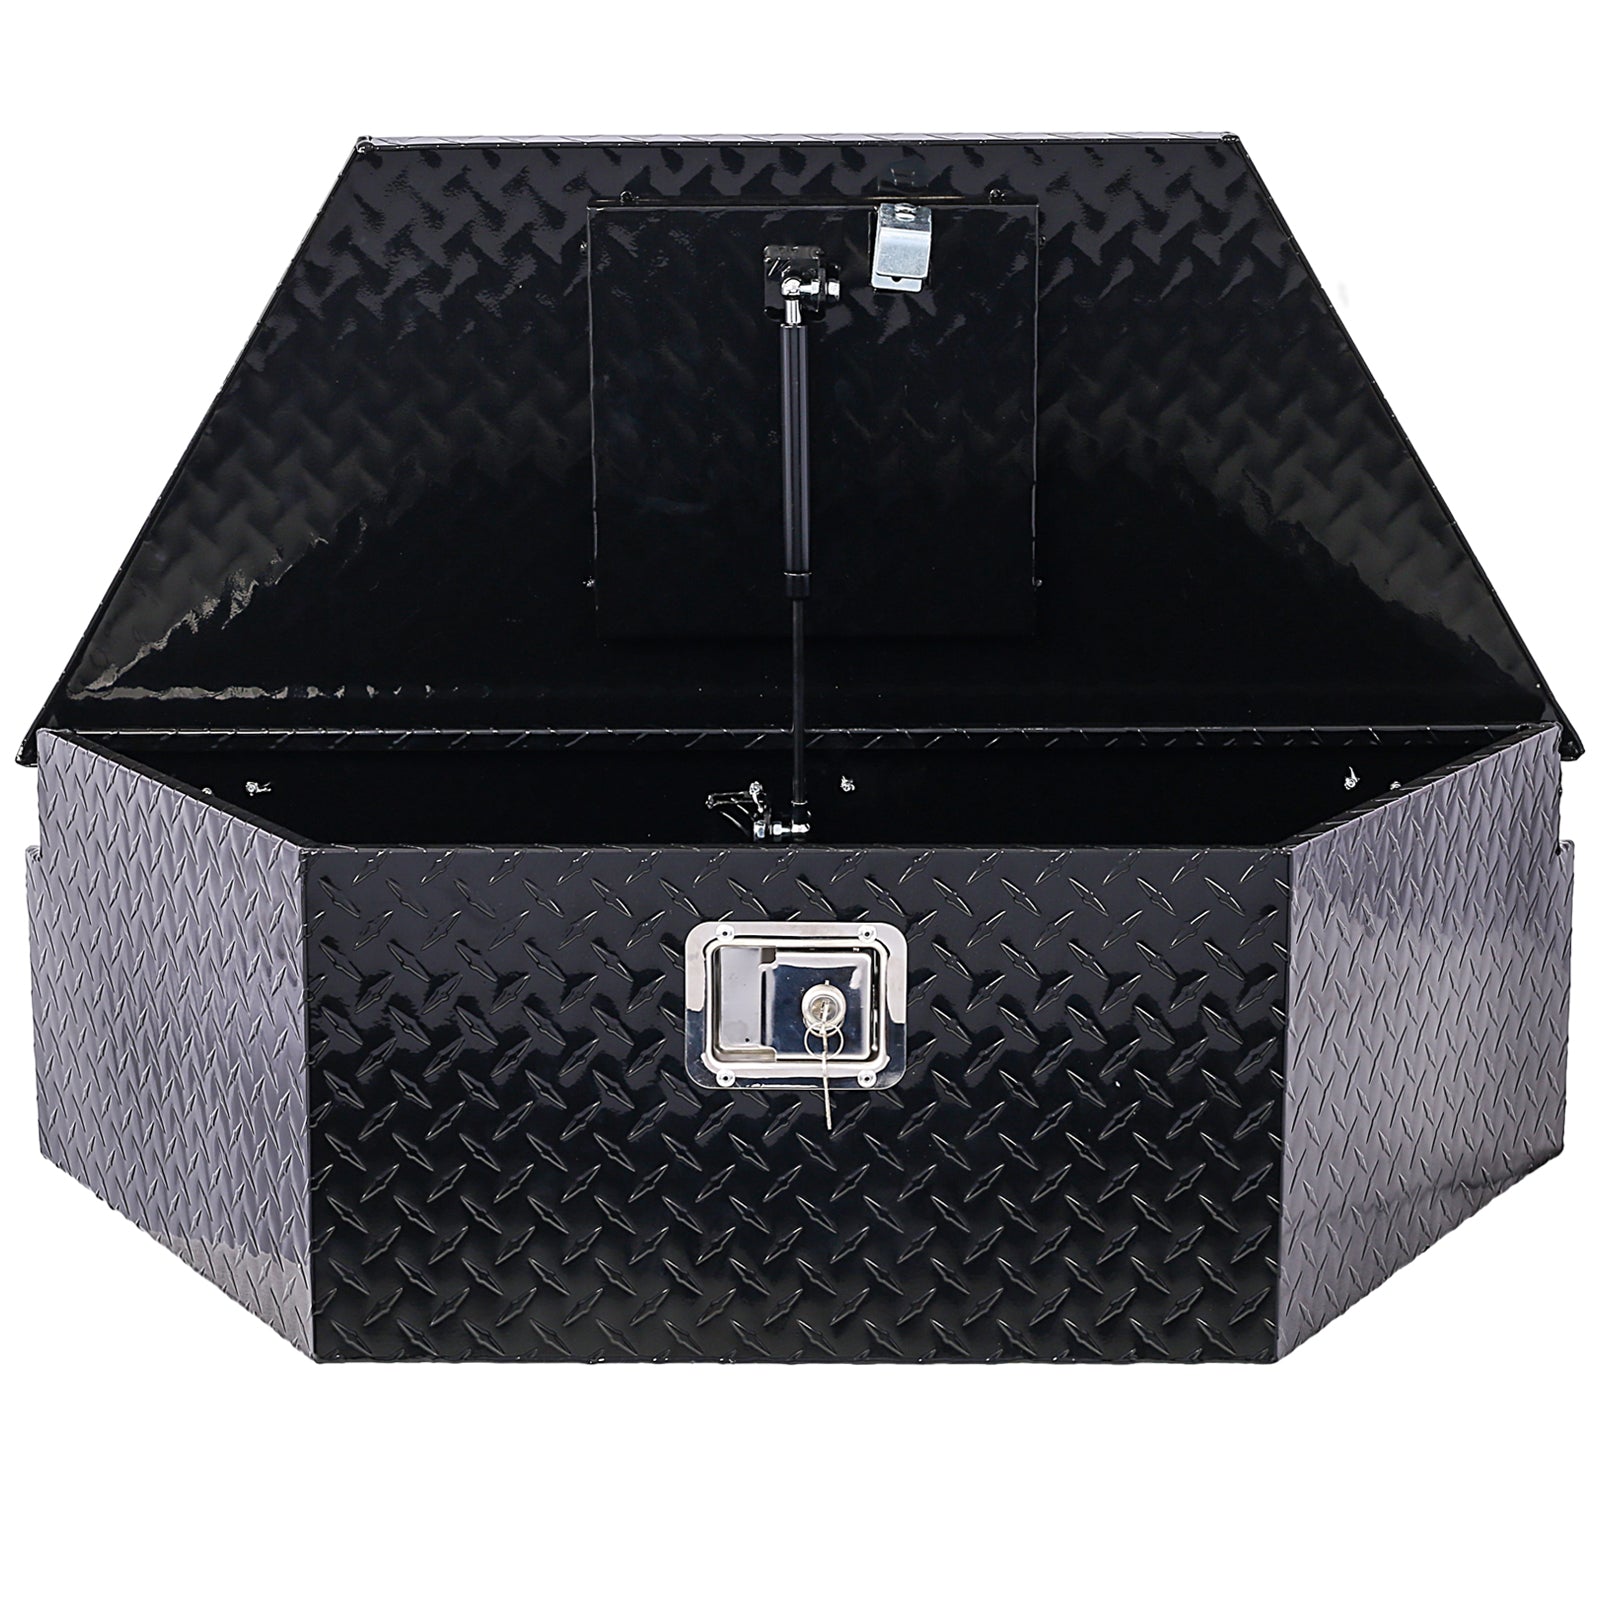 ZNTS 39inch Aluminum tool box,heavy duty truck bed tool box,outdoor trailer pickup tool box,RV W46581851